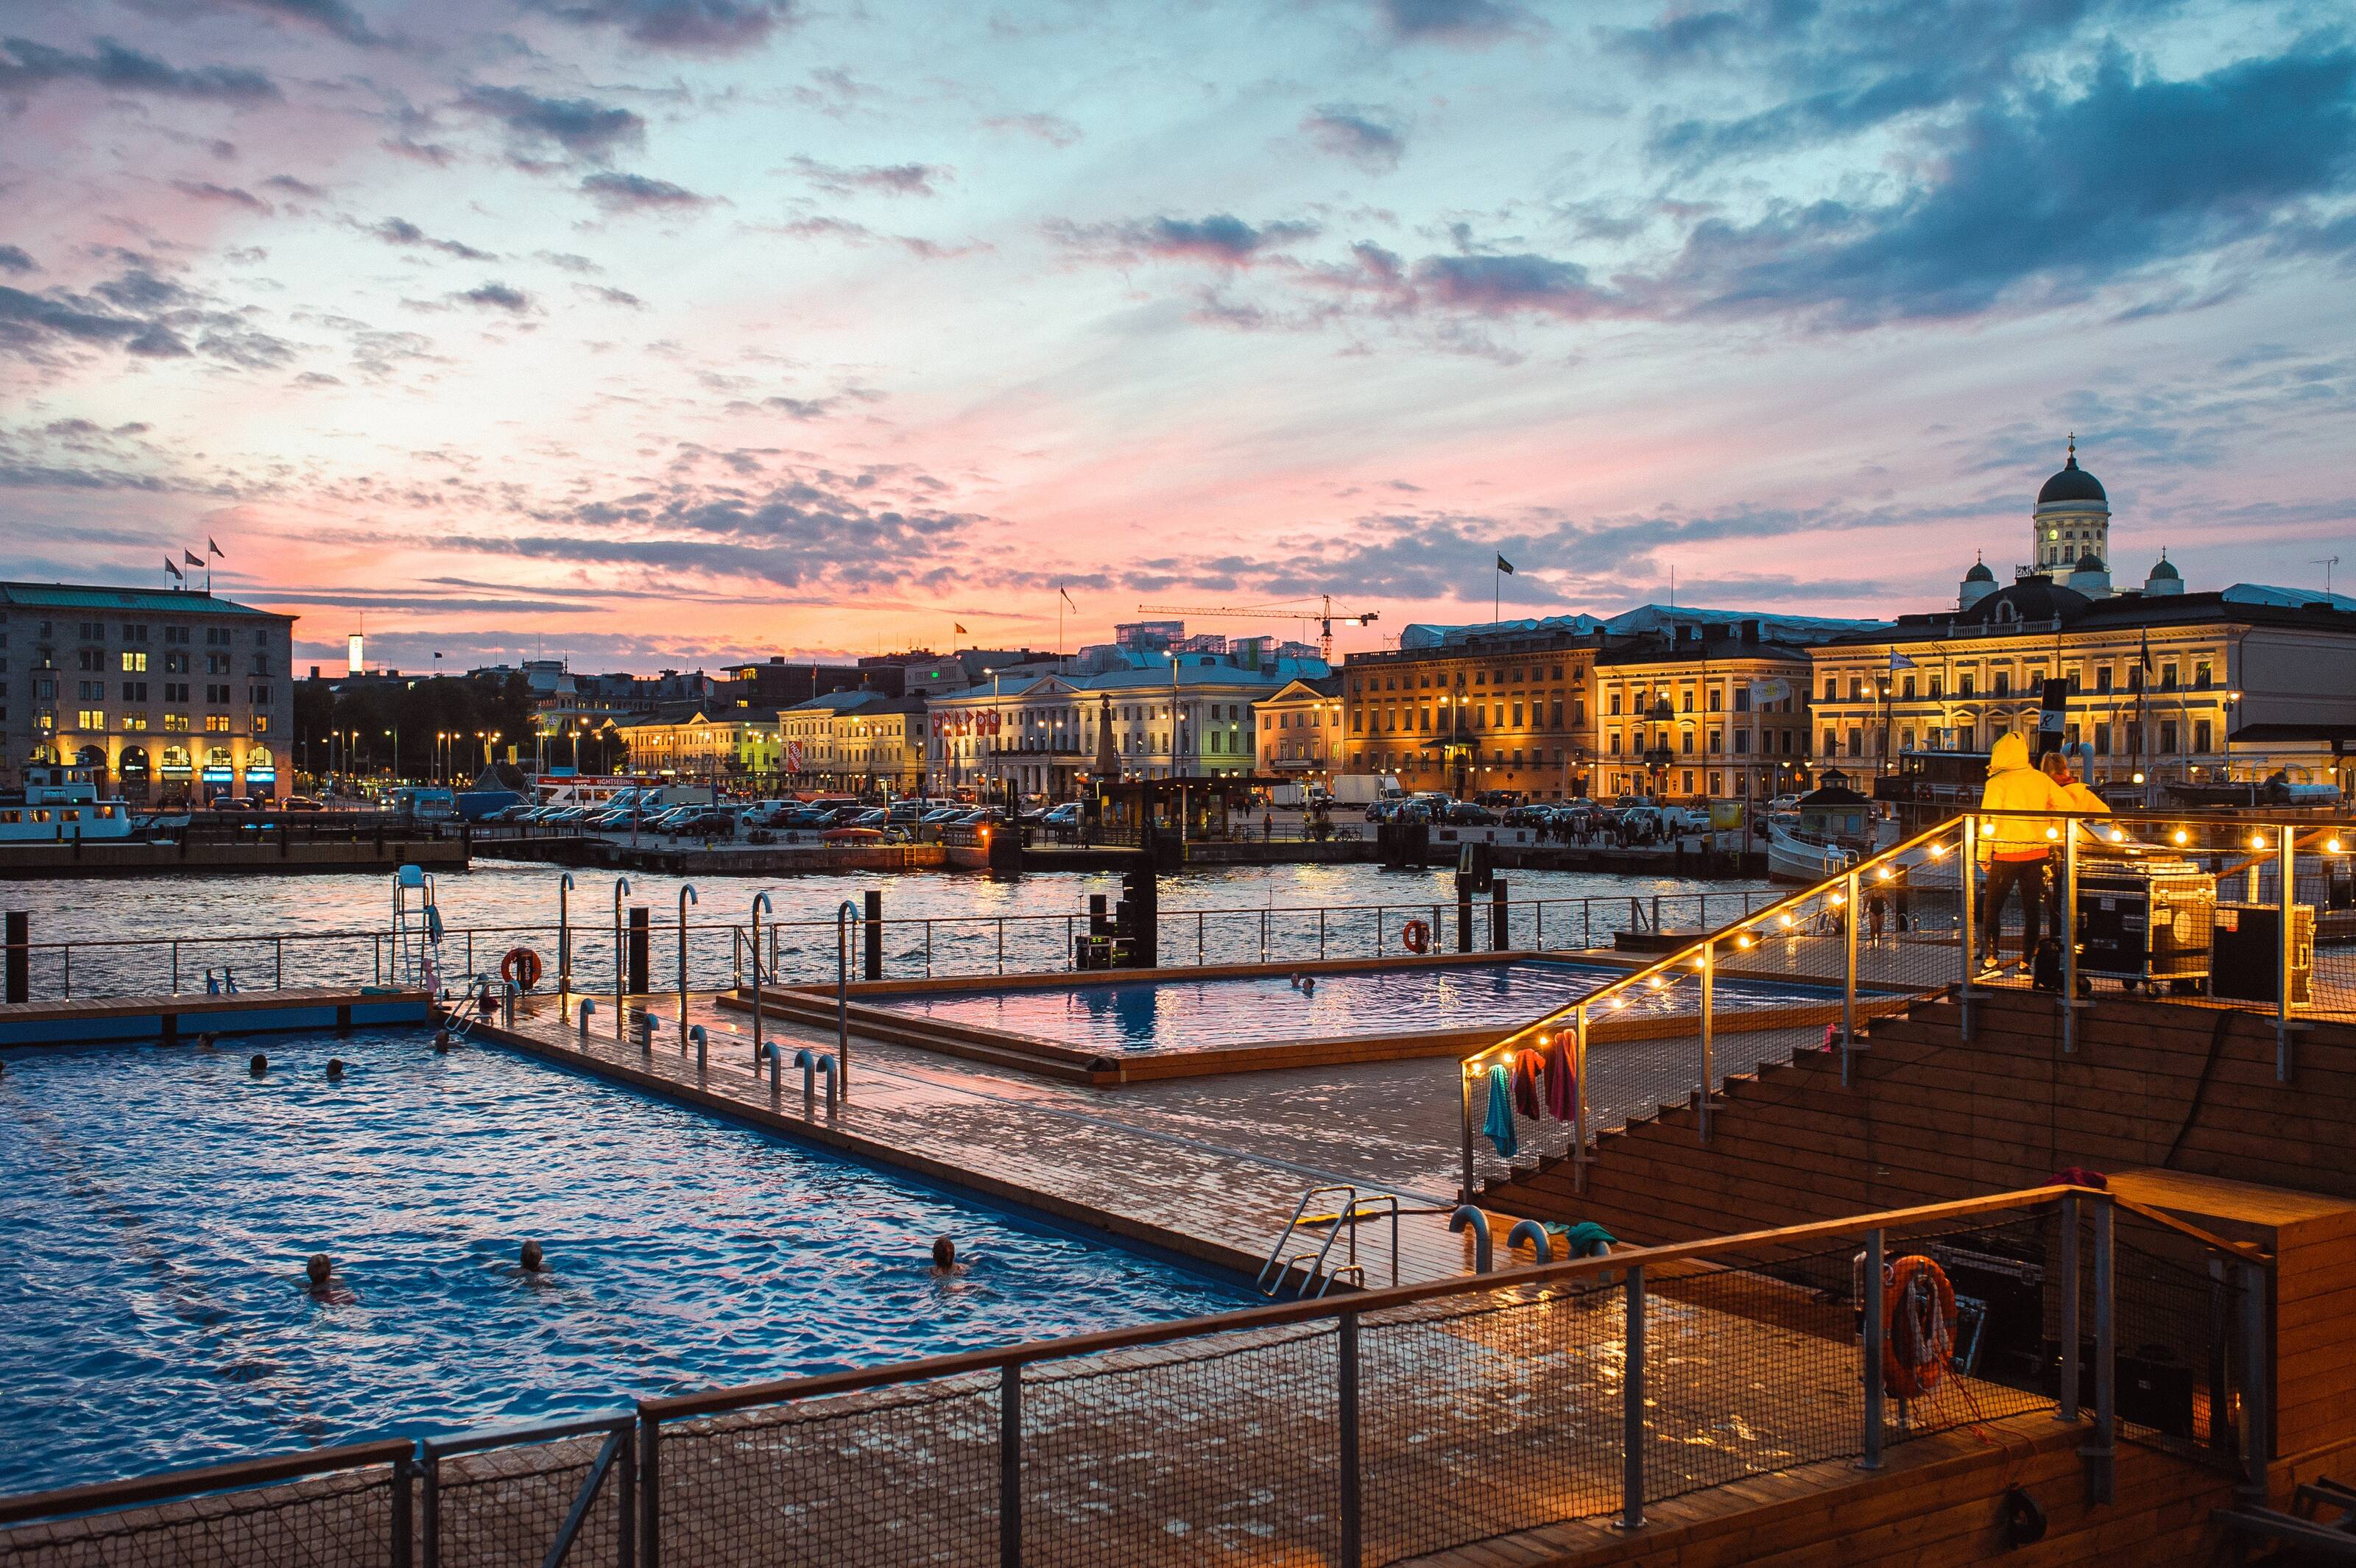 An outdoor city swimming pool in Helsinki